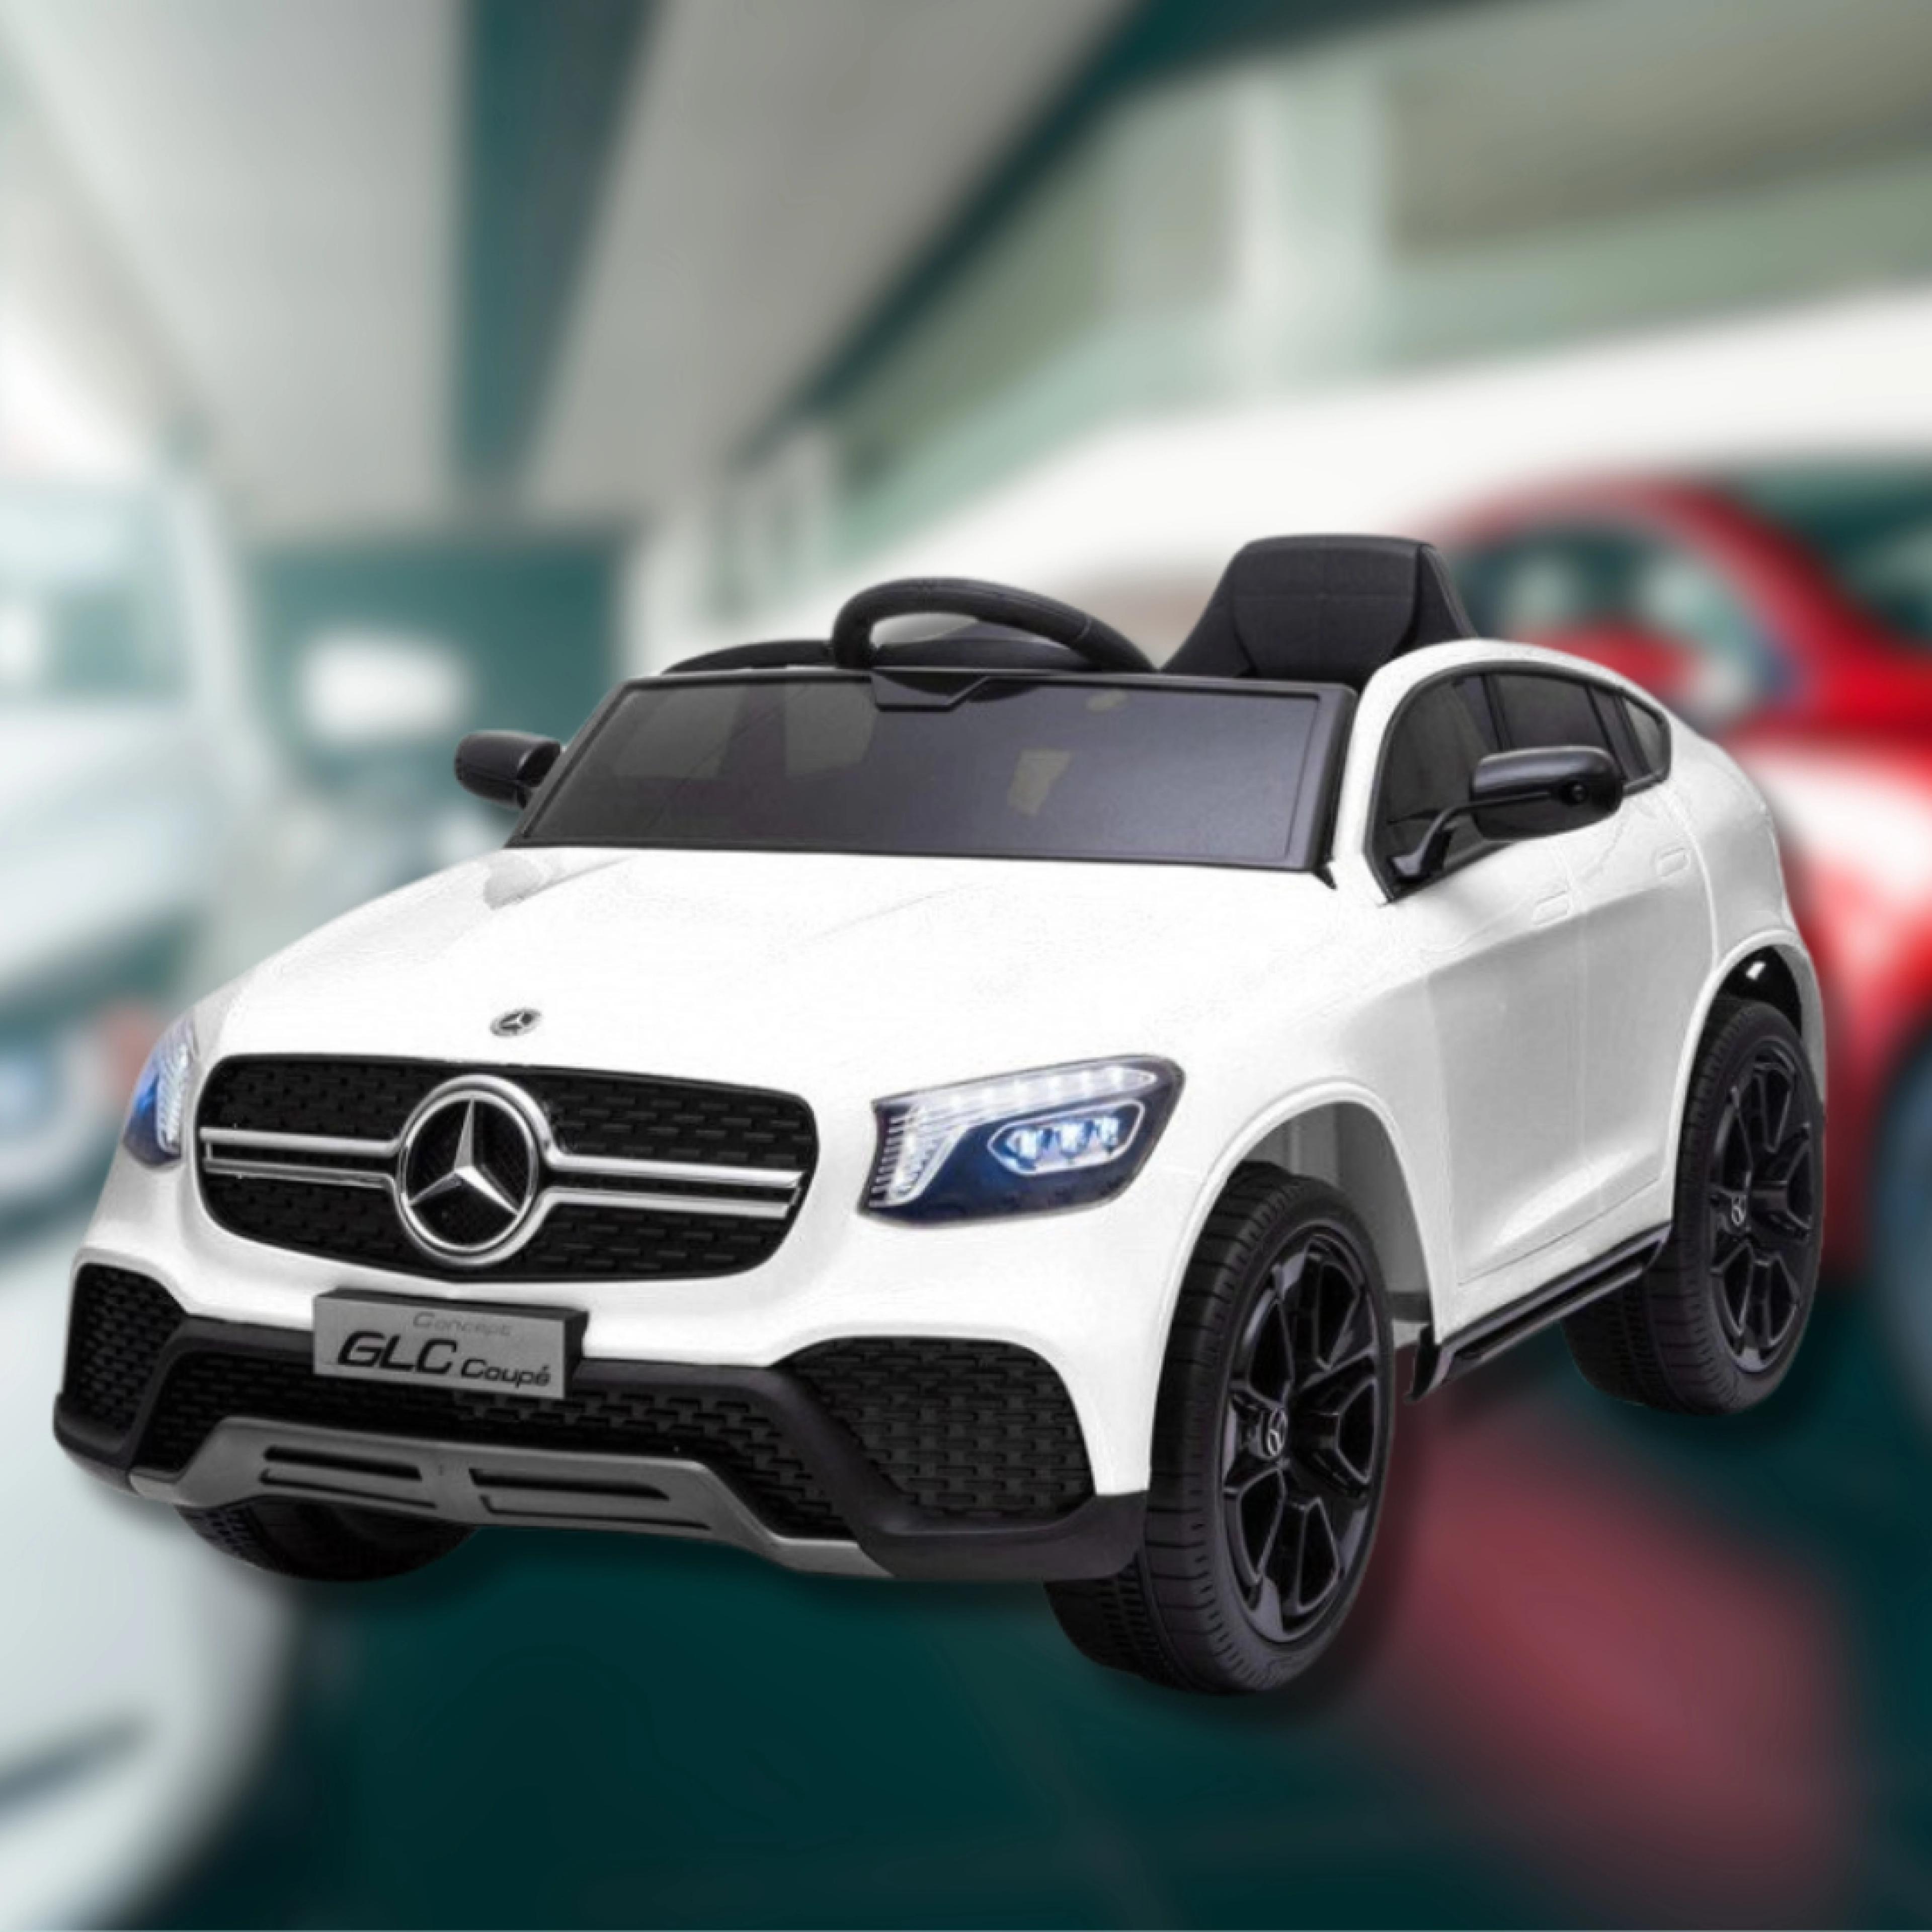 Imagen principal del producto Mercedes Benz GLC Coupe para niños- Coche infantil